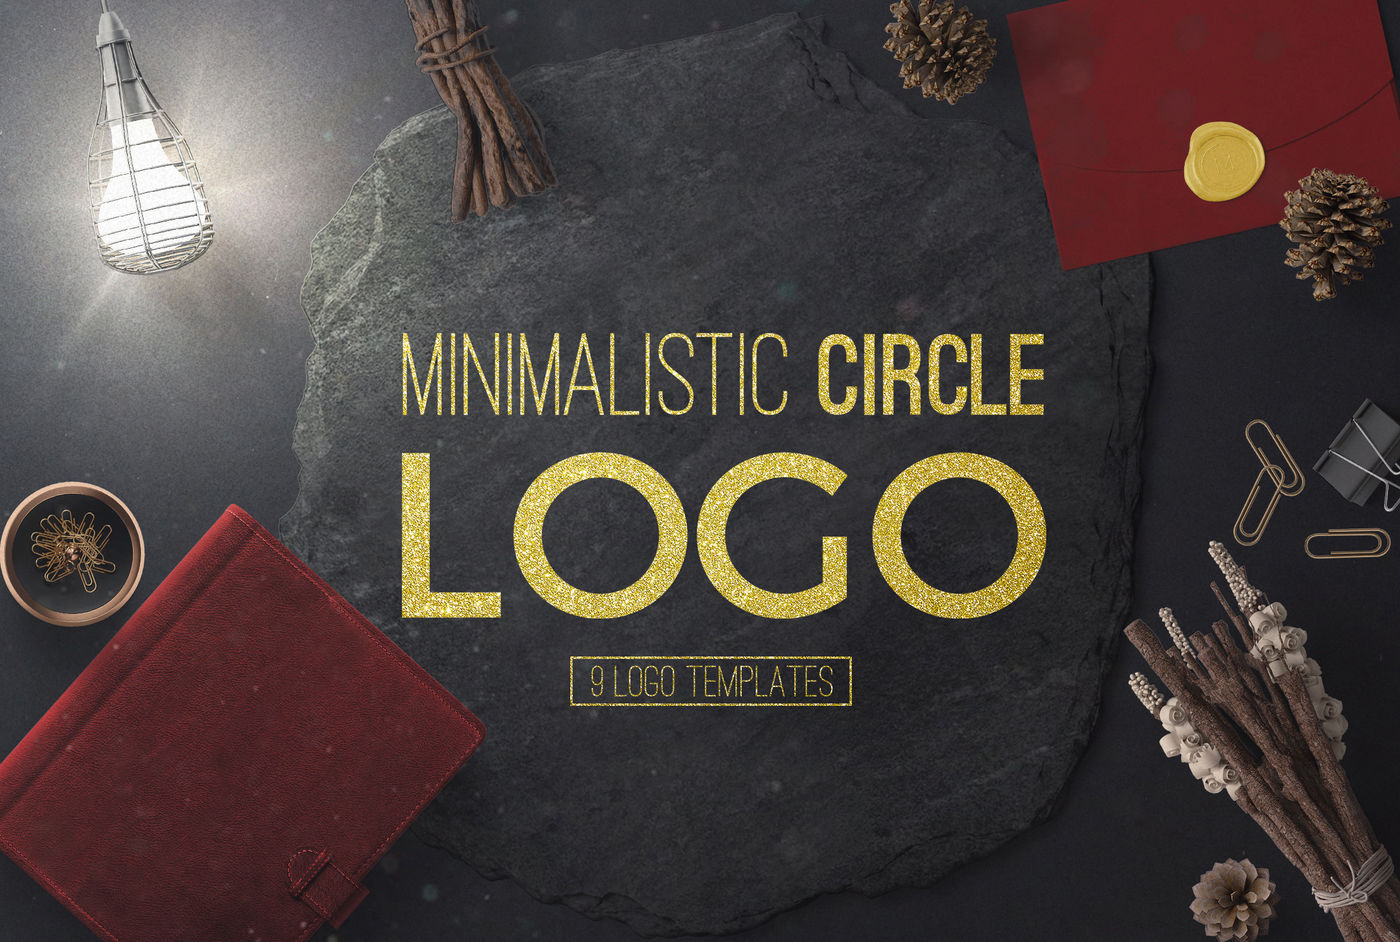 Minimalistic Circle Logo By Michael Rayback Design | TheHungryJPEG.com